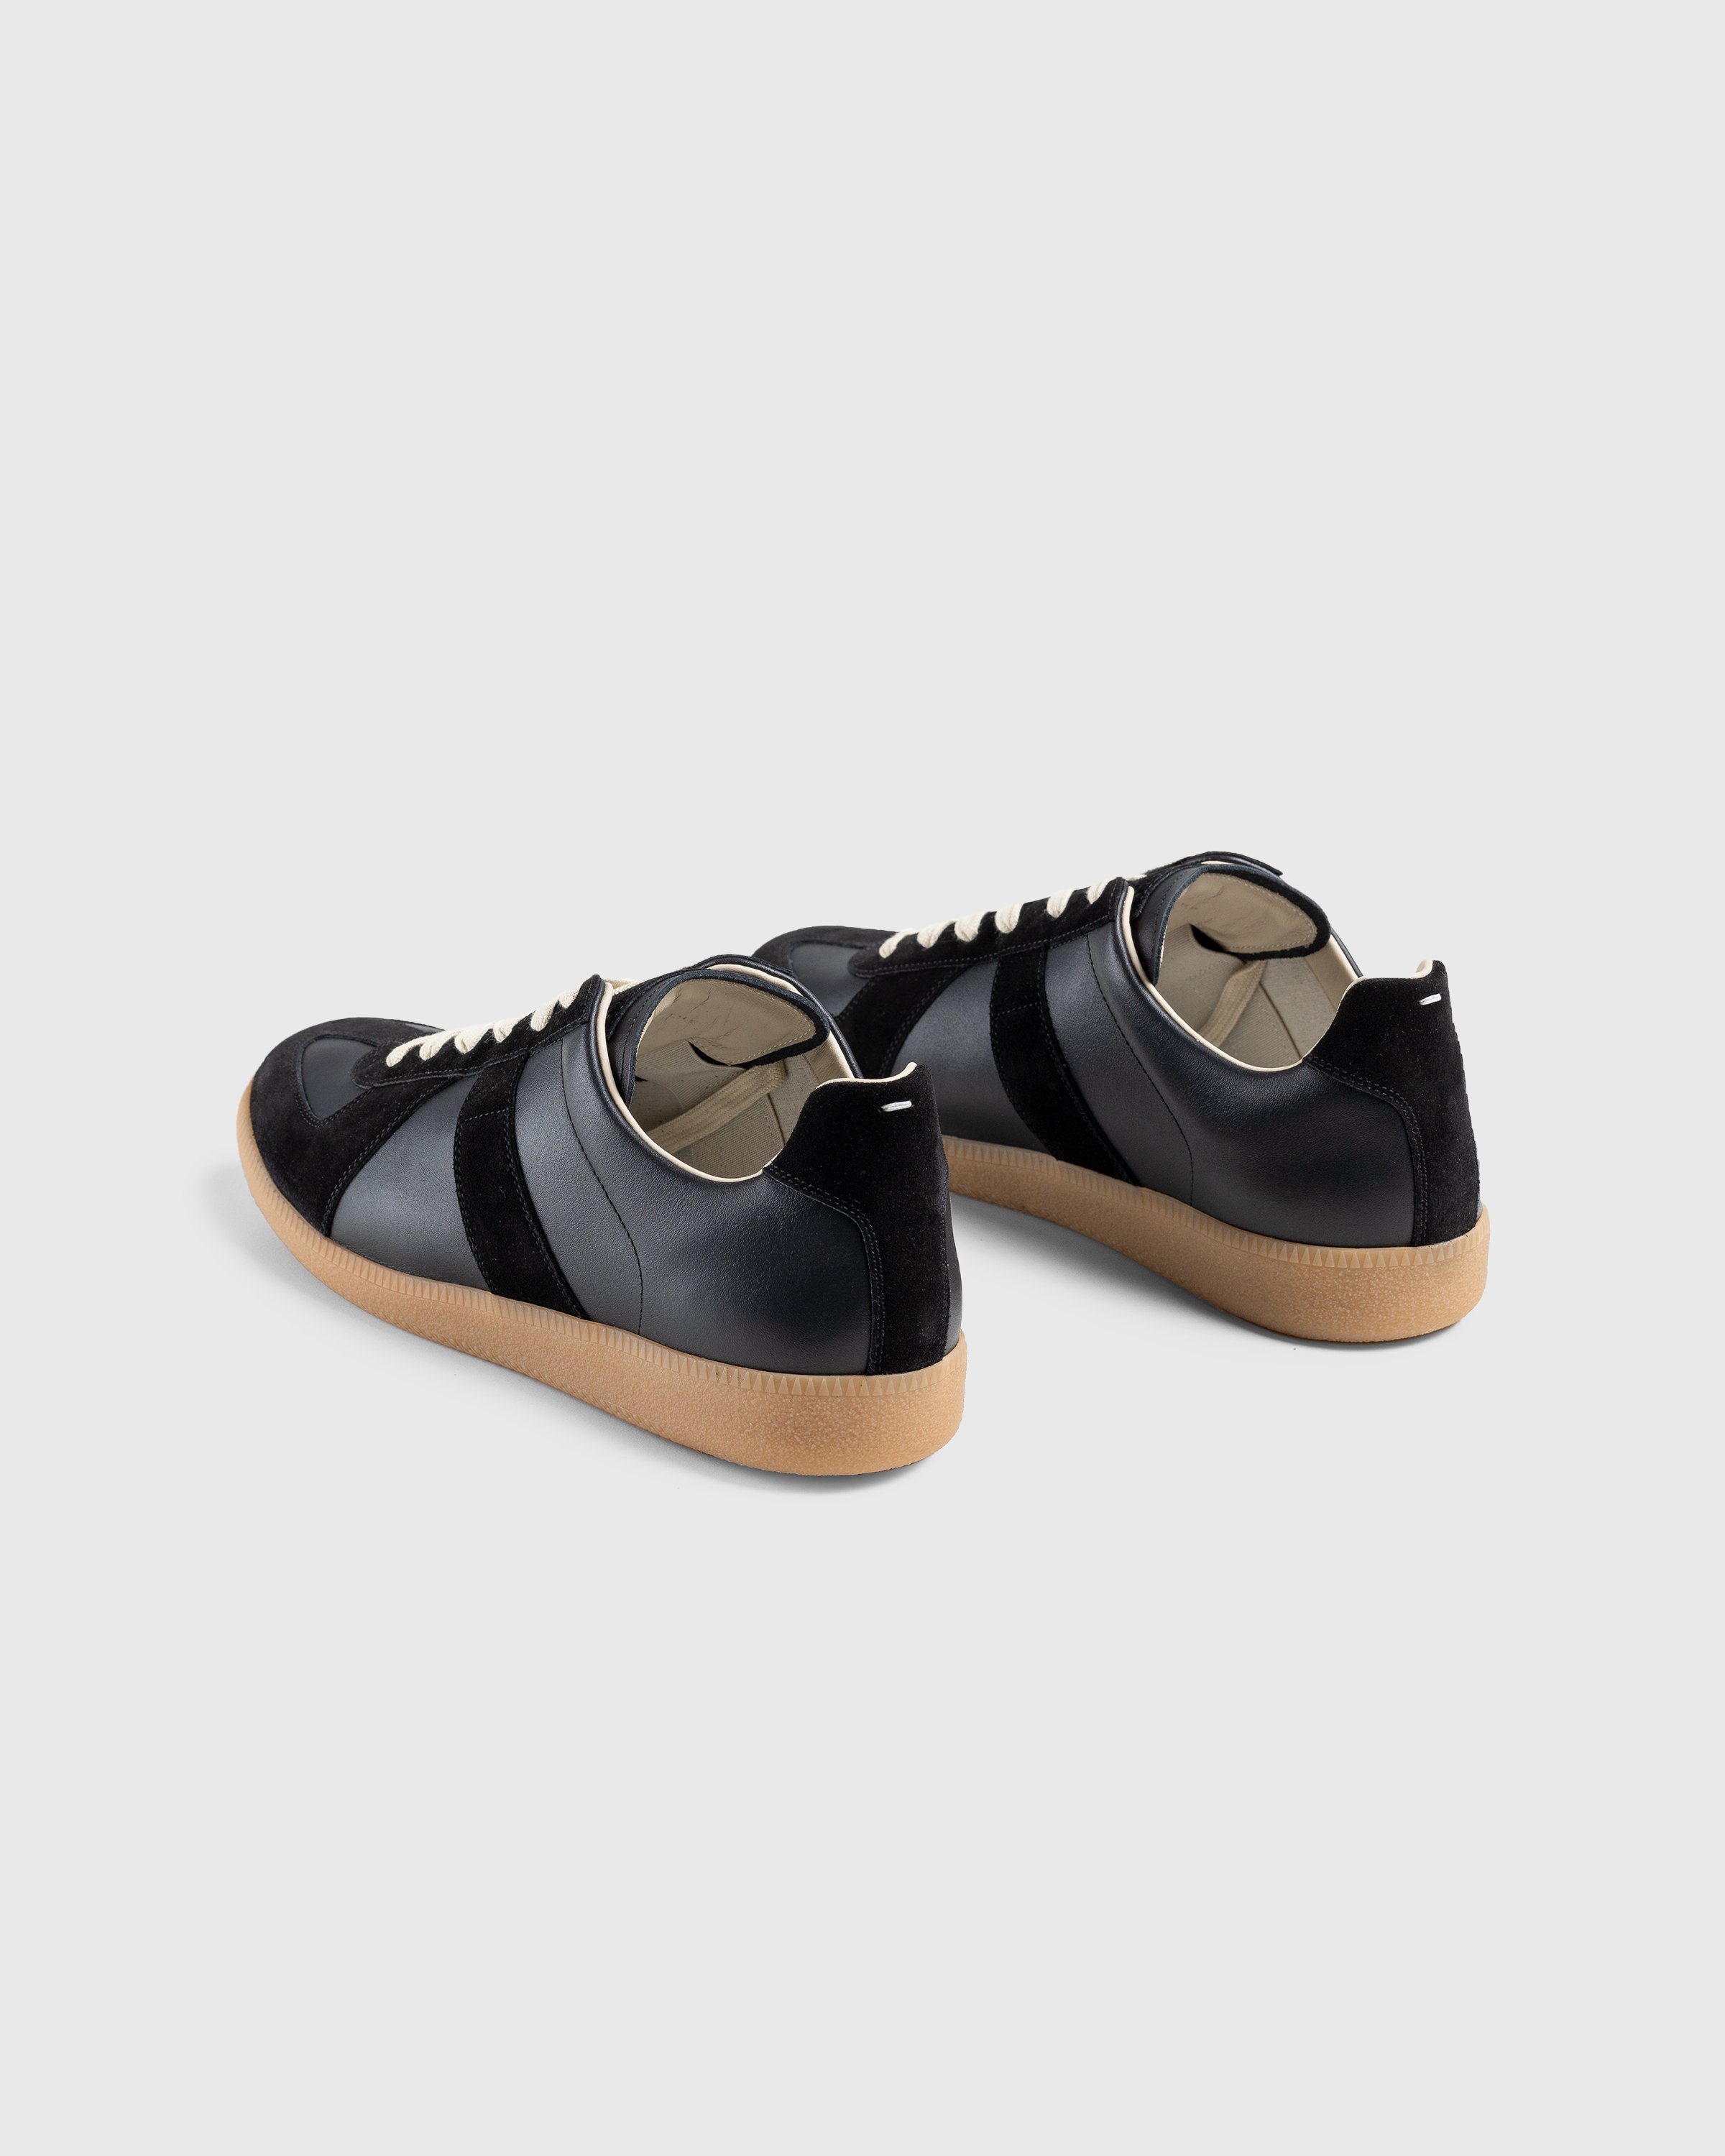 Maison Margiela - Leather Replica Sneakers Black - Footwear - Black - Image 4